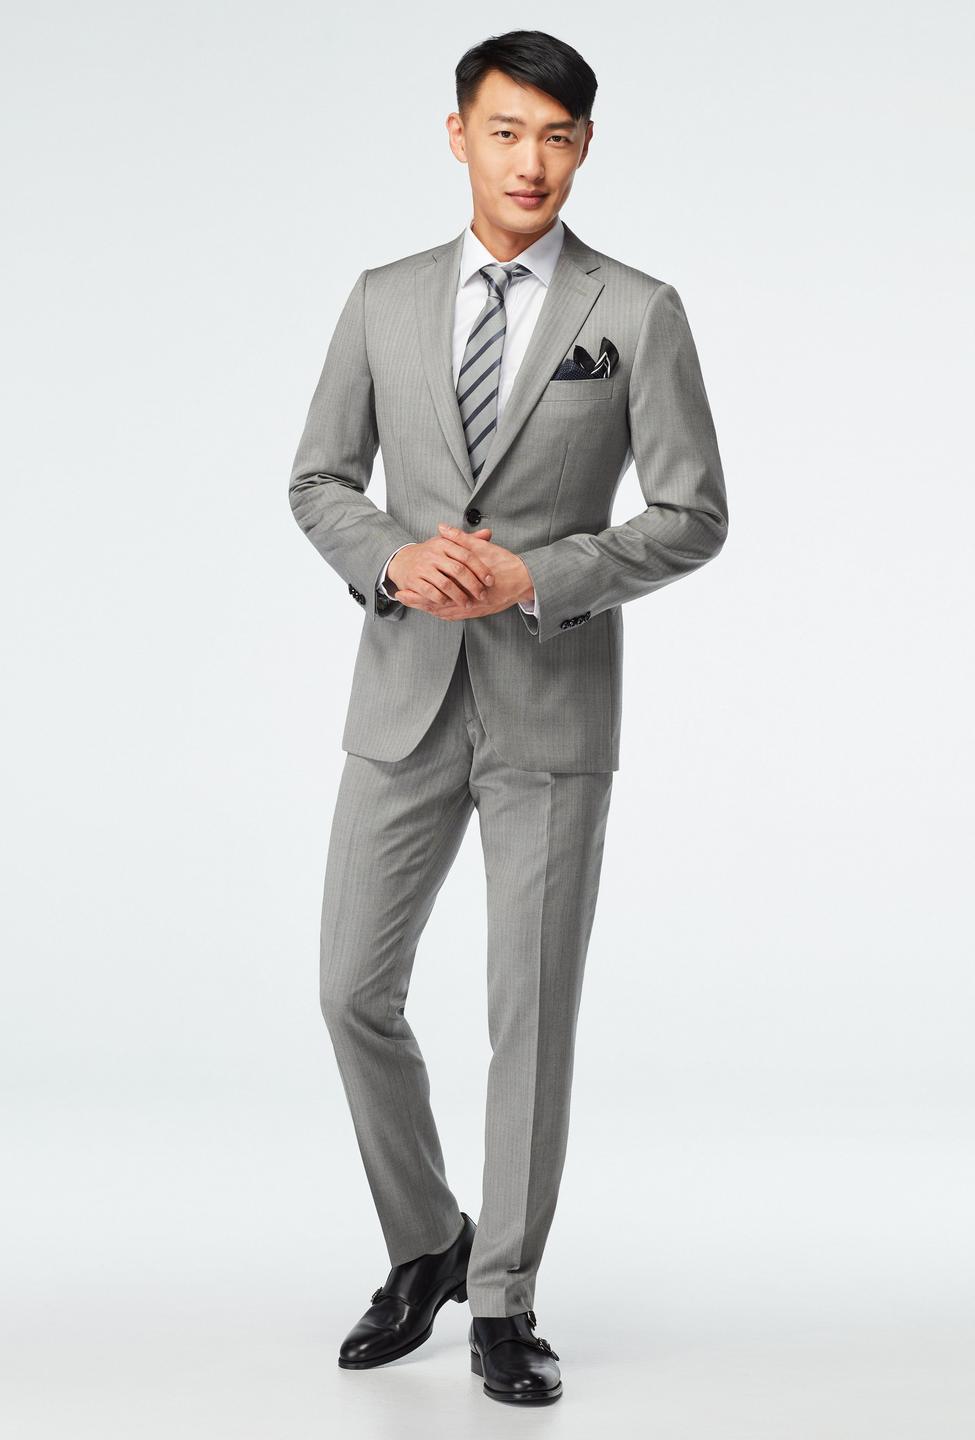 Gray suit - Highbridge Herringbone Design from Luxury Indochino Collection